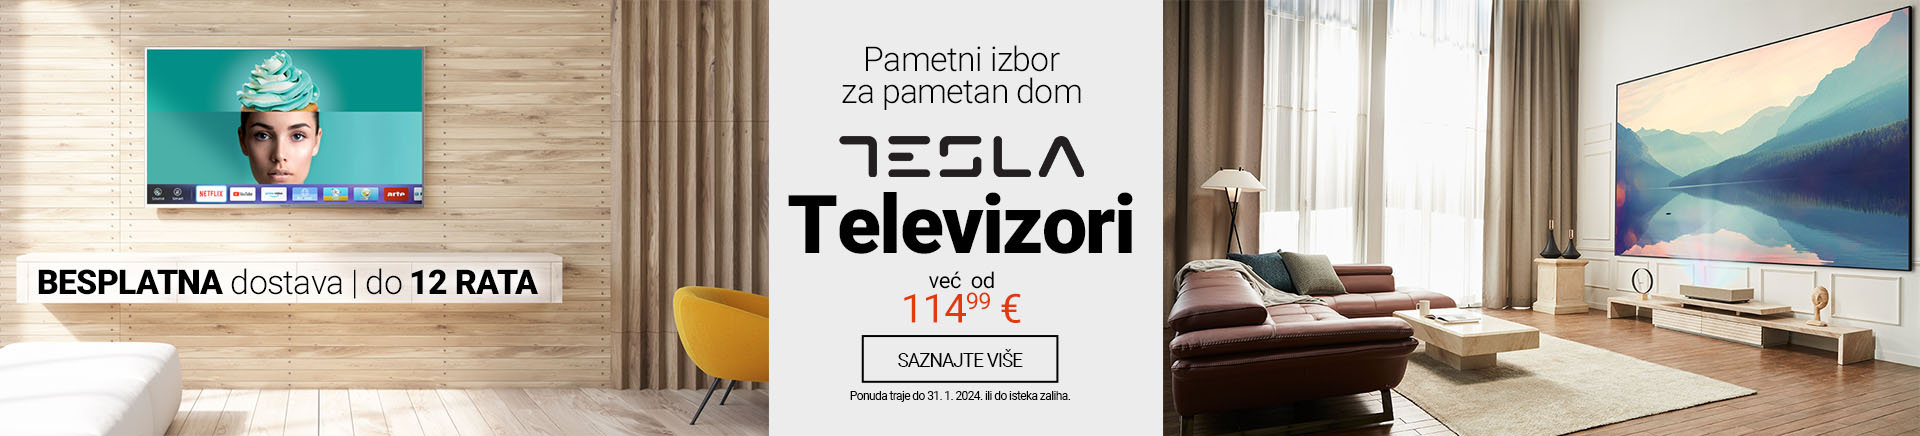 CG~Pametni izbor Tesla Televizori TV WIDESCREEN 1920 X 436.jpg